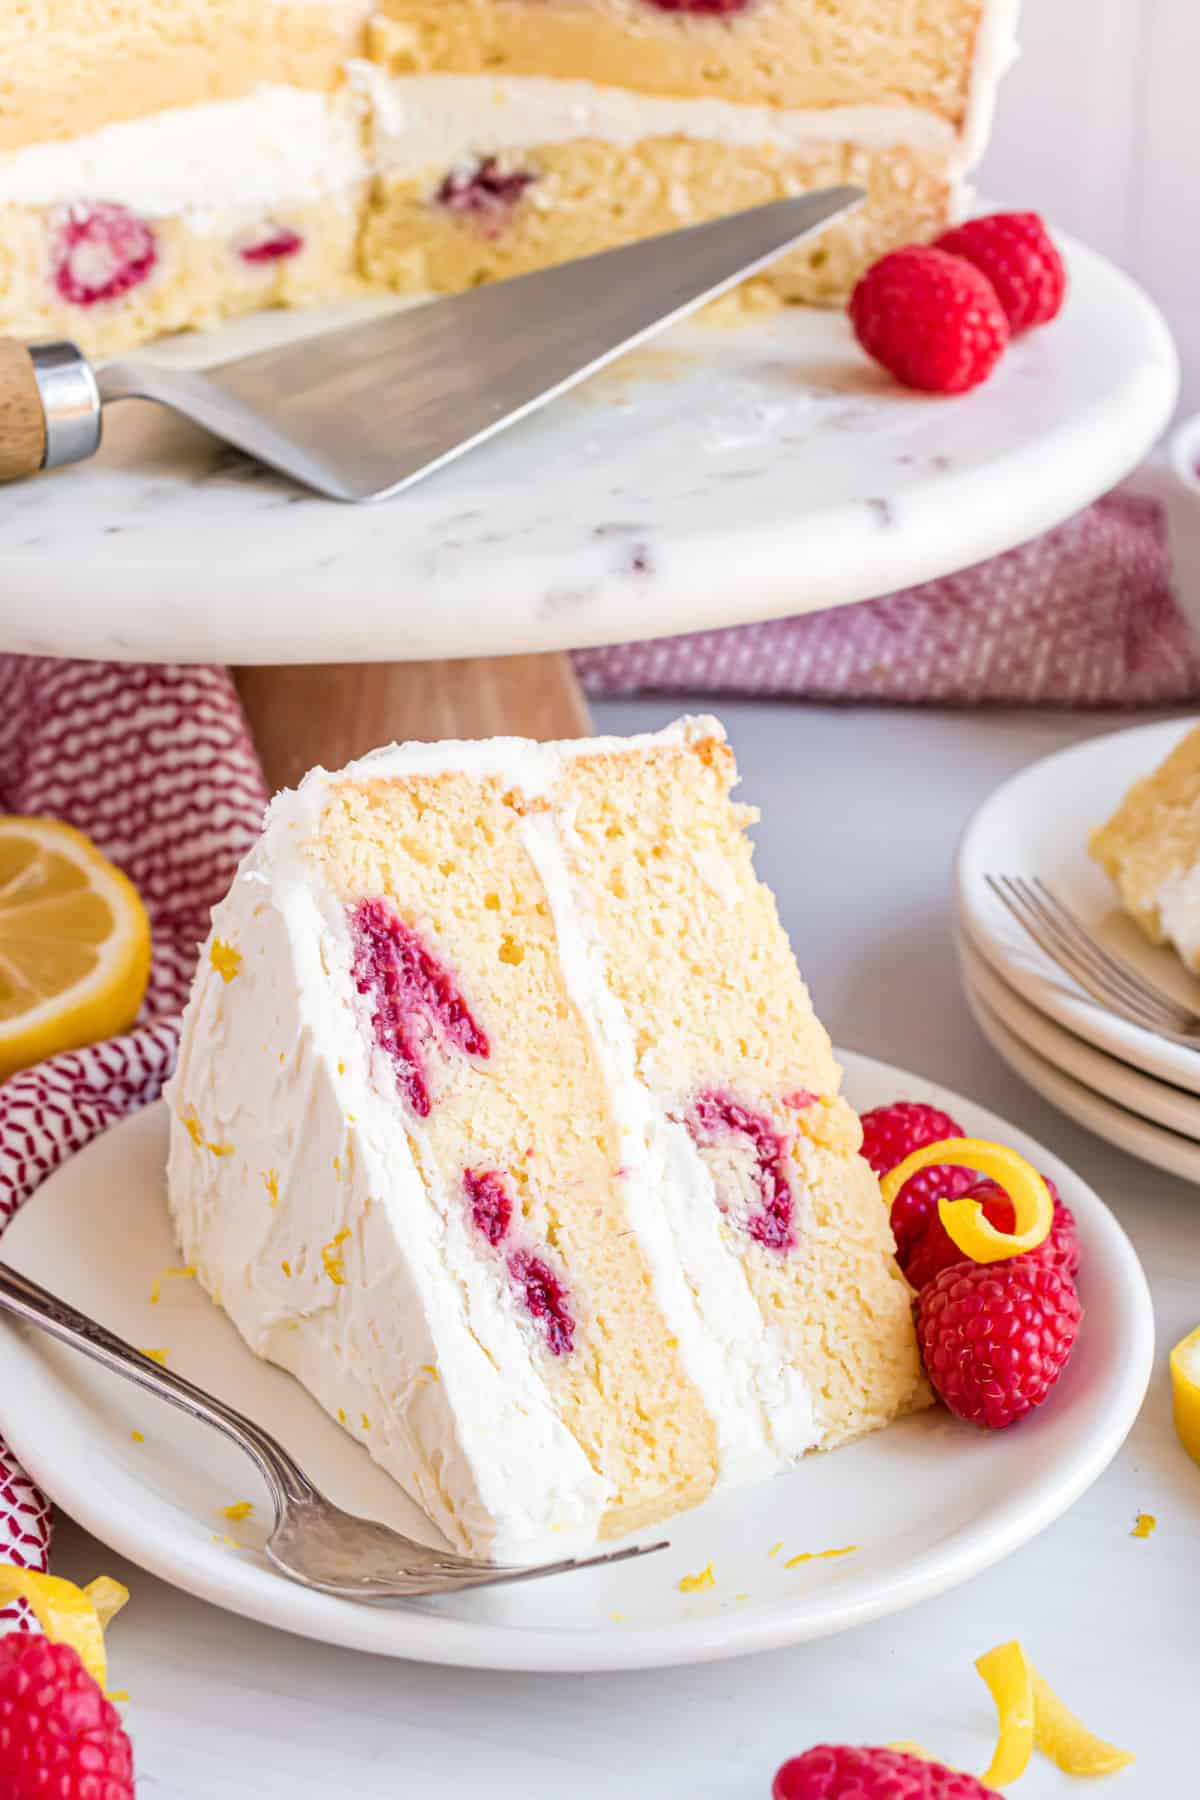 Slice of raspberry lemon layer cake with creamy lemon frosting.